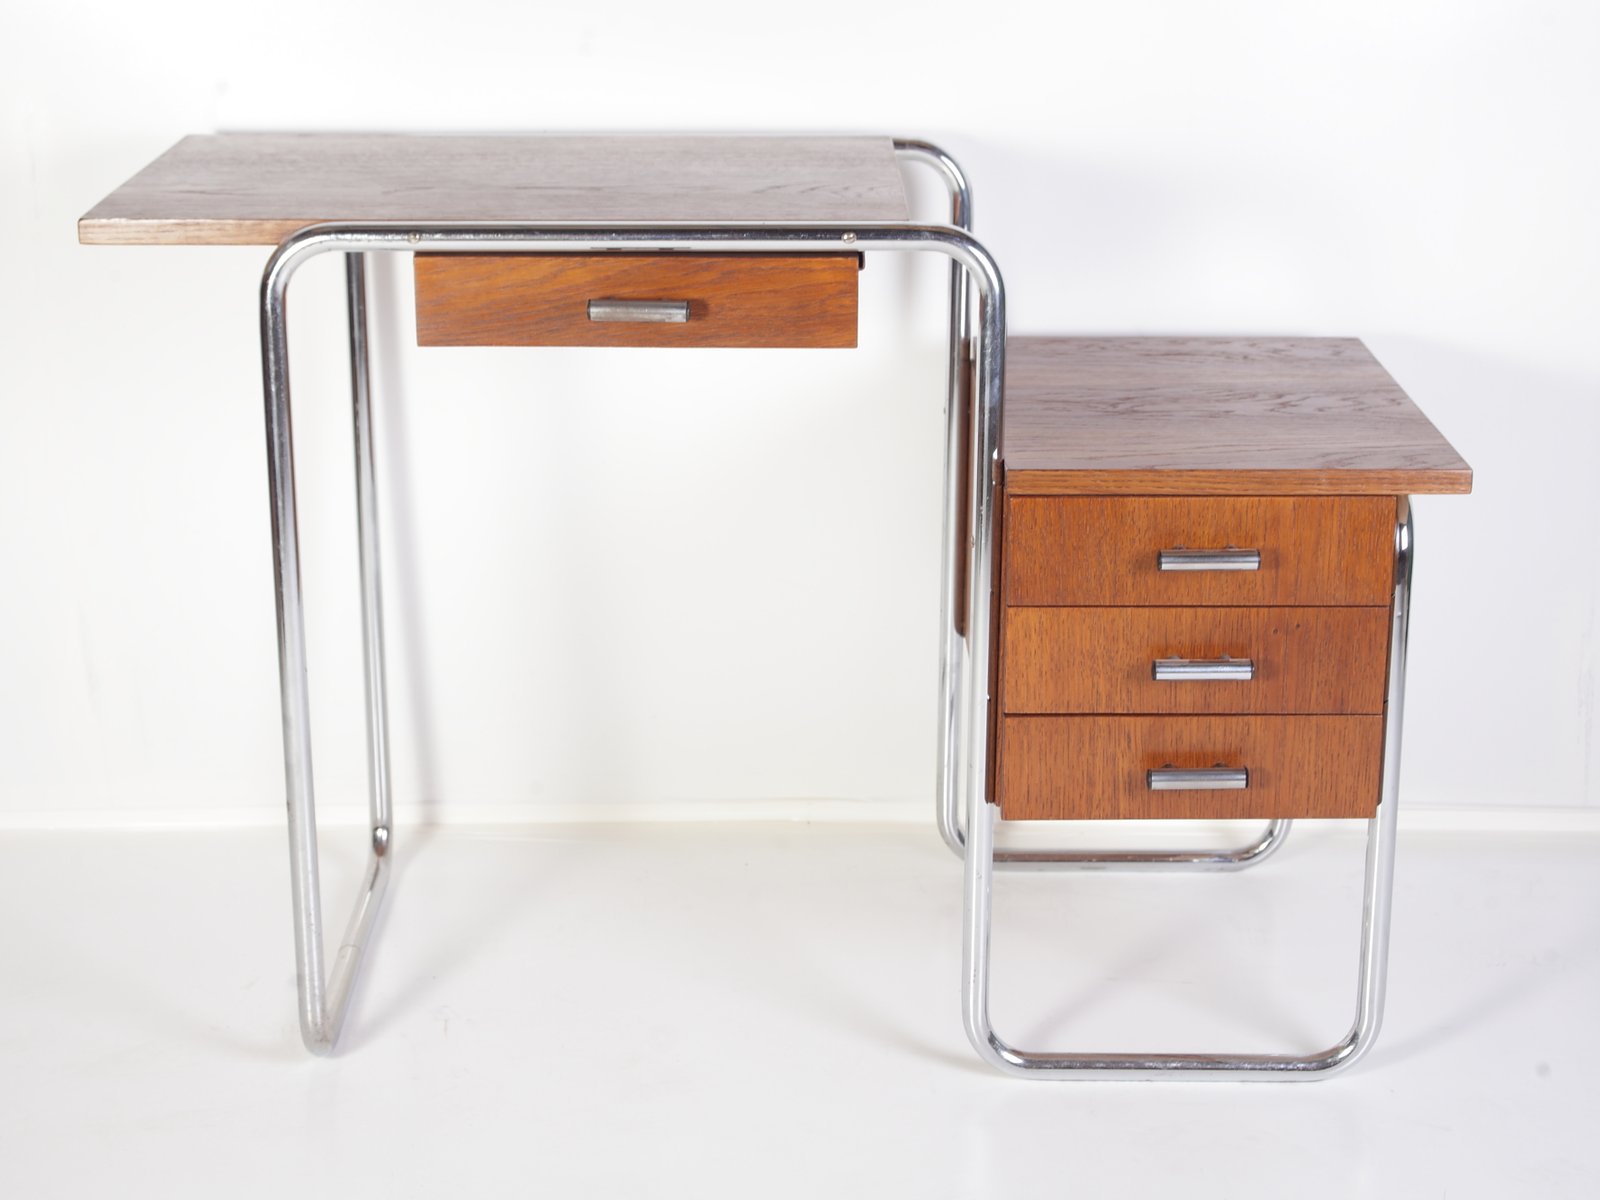 tubular chrome table or desk from kovona 1950s ALG-920076